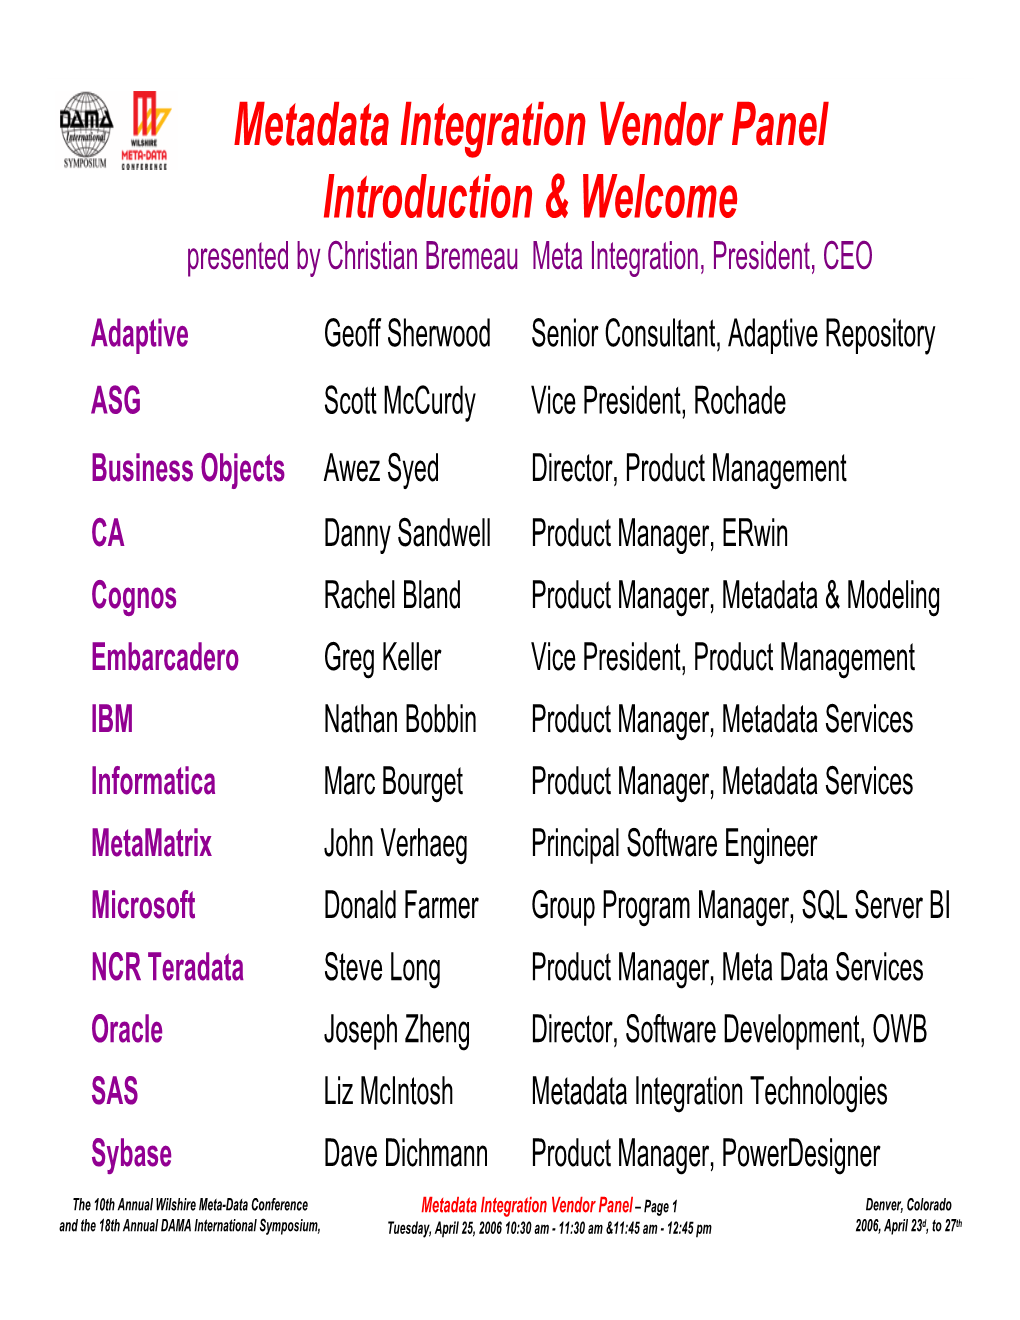 Metadata Integration Vendor Panel Introduction & Welcome